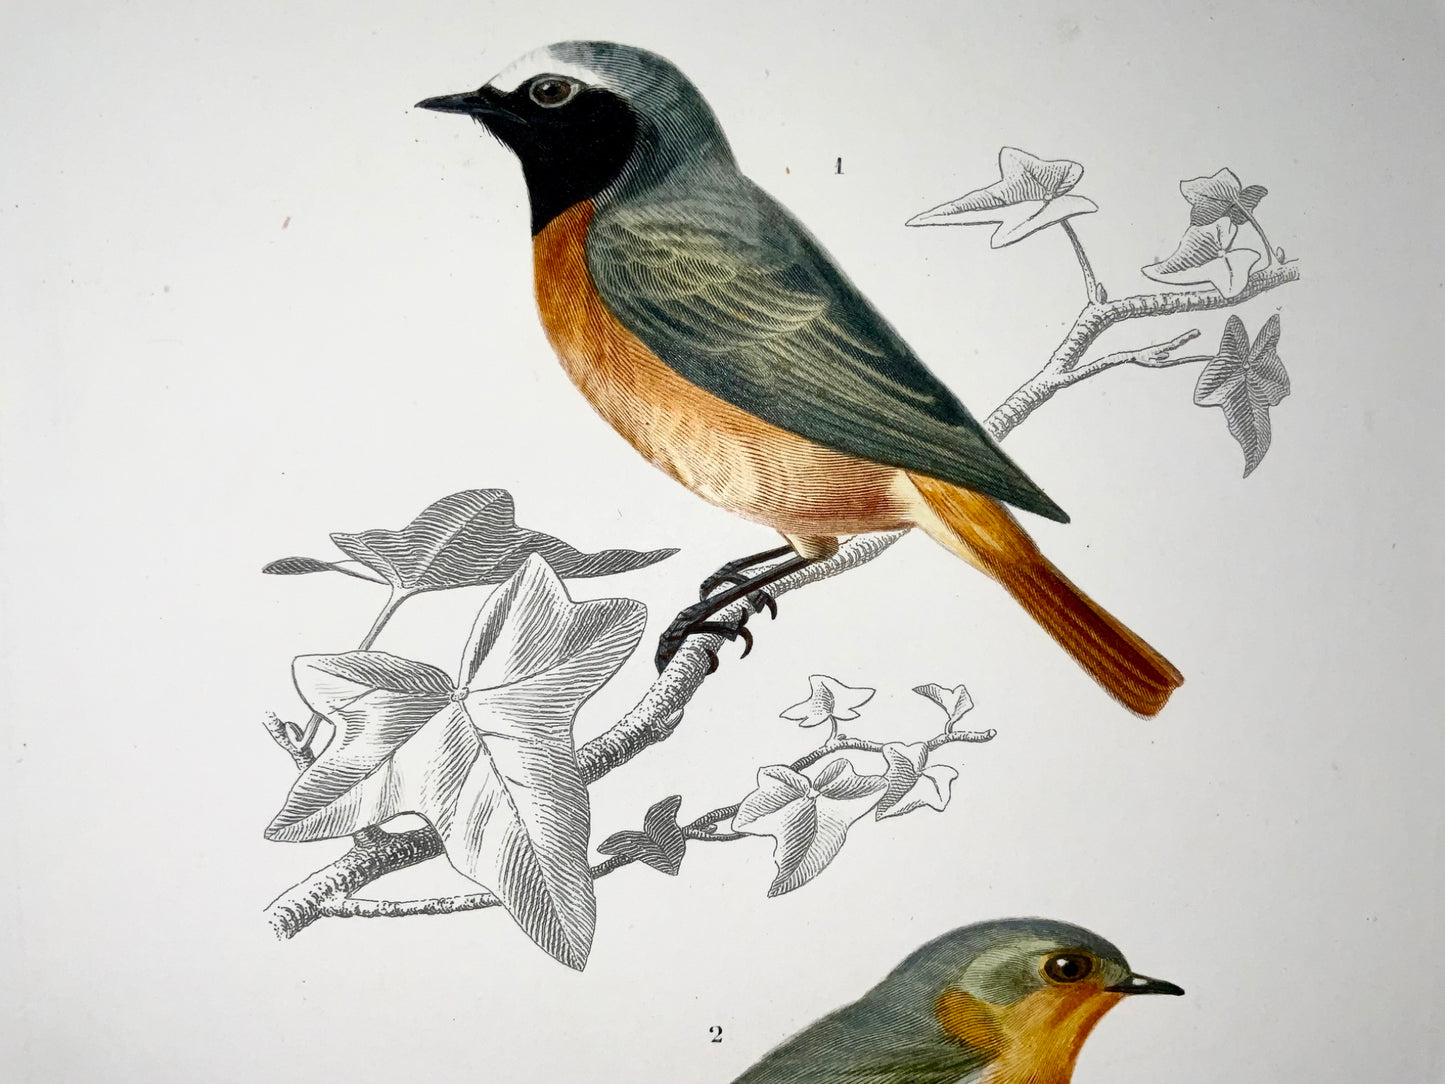 1840 Nightingales, ornithology, Ed. Travies, original hand colour